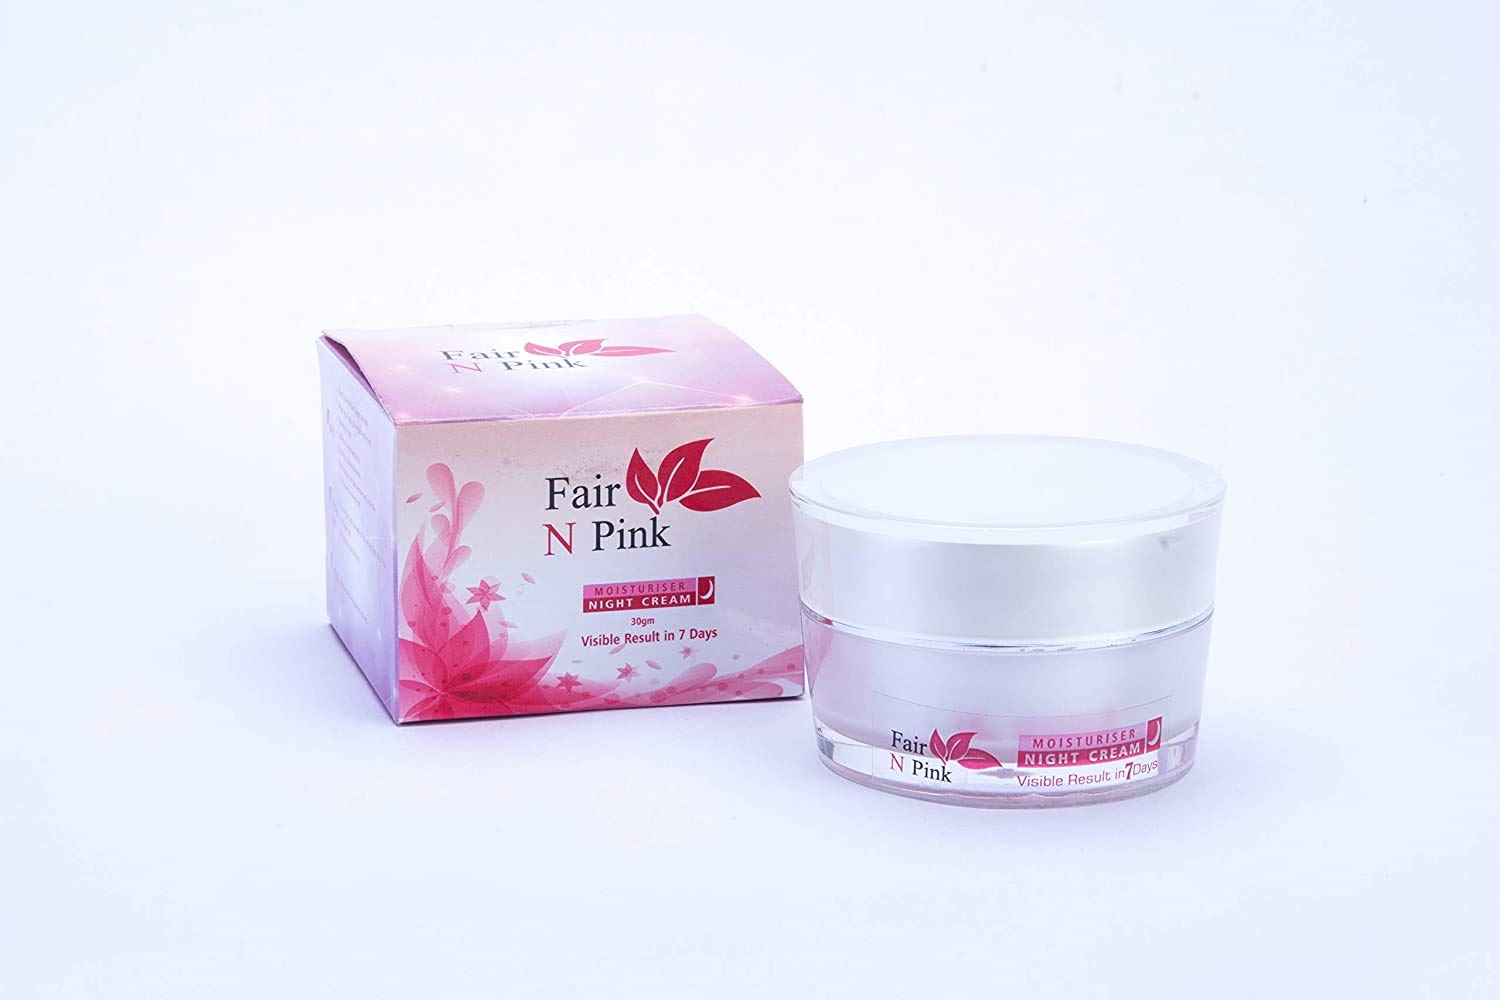 Fair & Pink Skin Whitening Cream